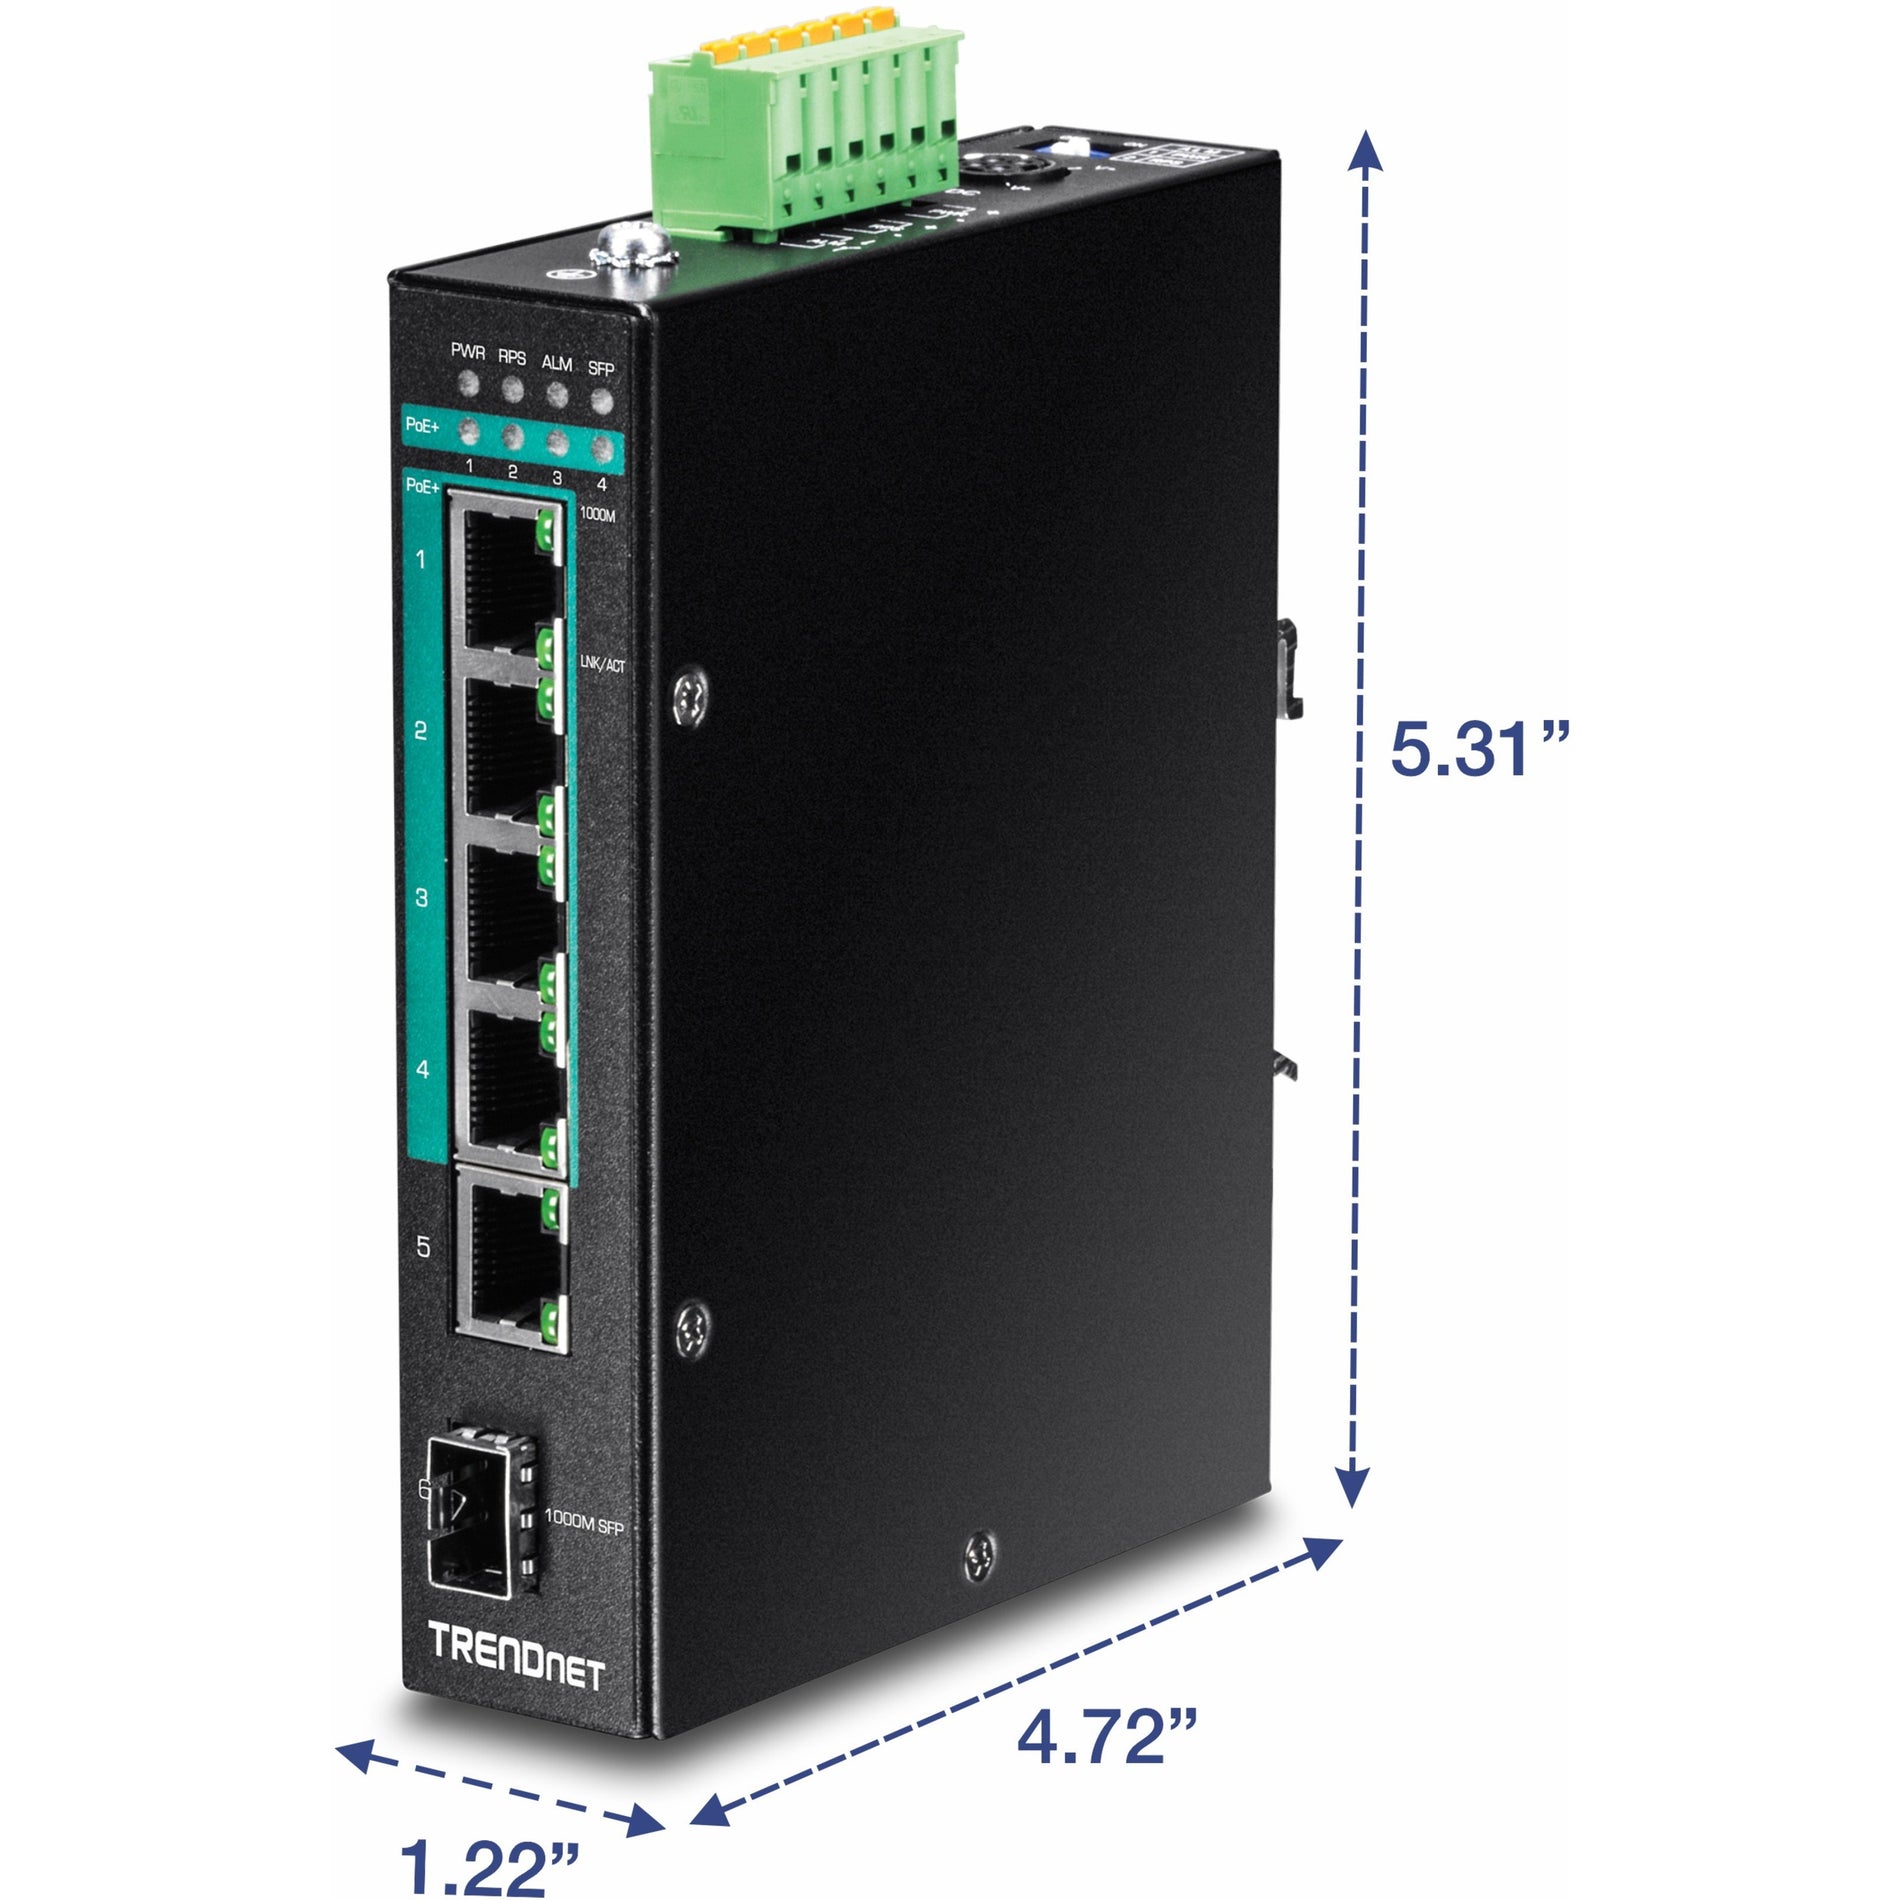 TRENDnet TI-PG541i 6-port hardened Industrial Gigabit PoE+ Layer 2 Managed DIN-Rail Switch, TAA/NDAA Compliant, Lifetime Warranty